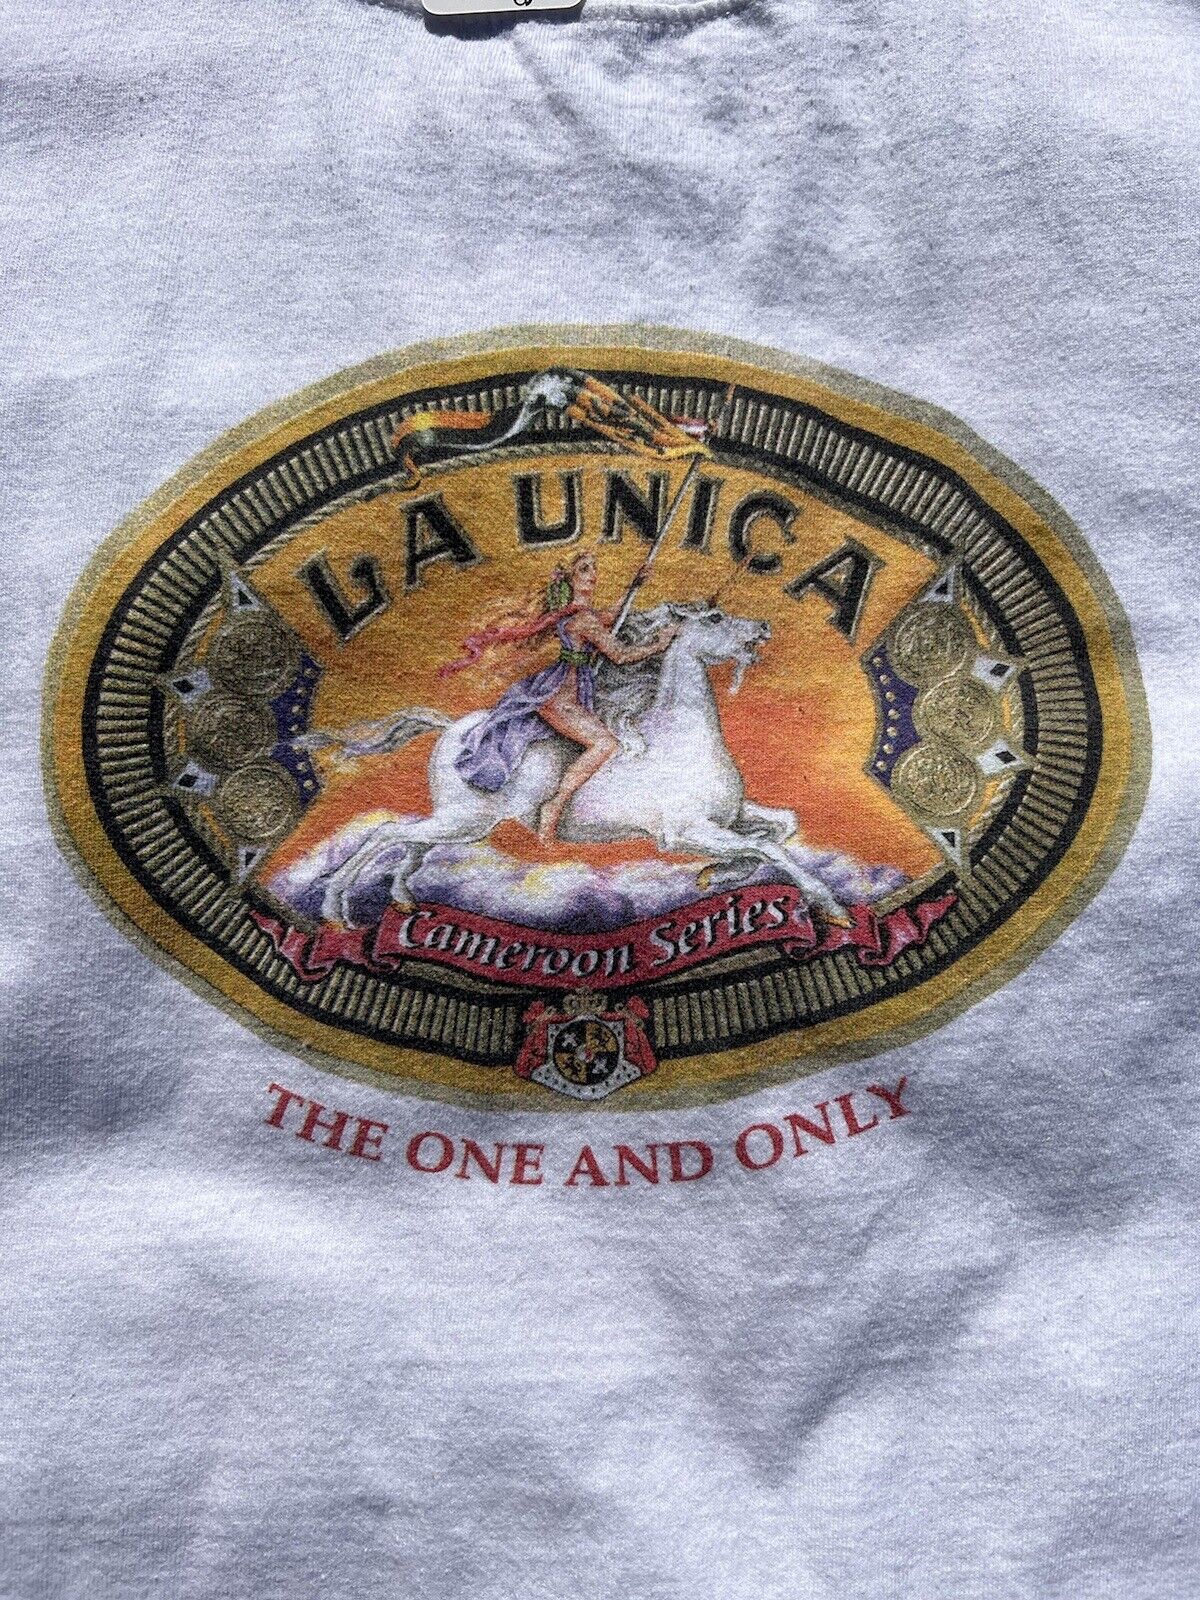 Vintage La Única Cigars Shirt Made In USA 90s Anv… - image 2